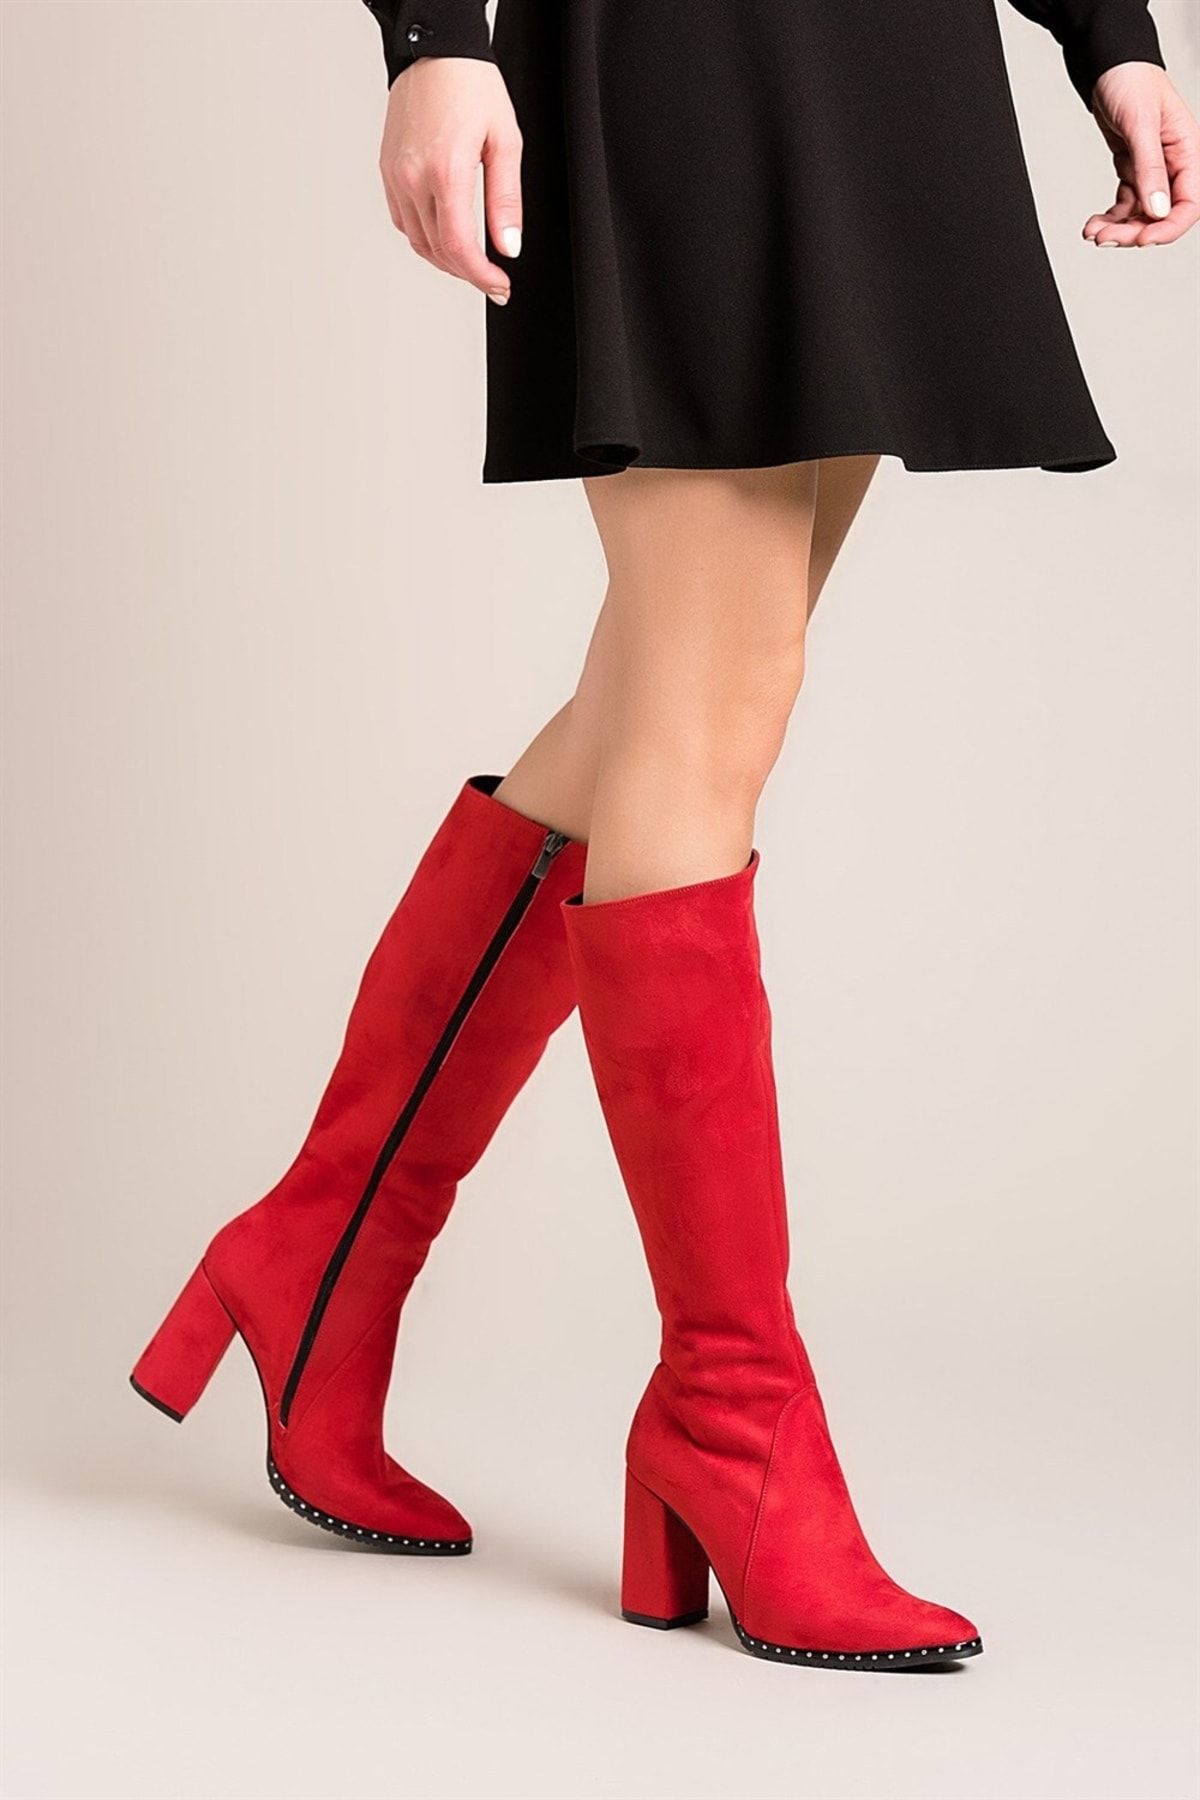 Fox Shoes Kırmızı Kadın Çizme C654088502